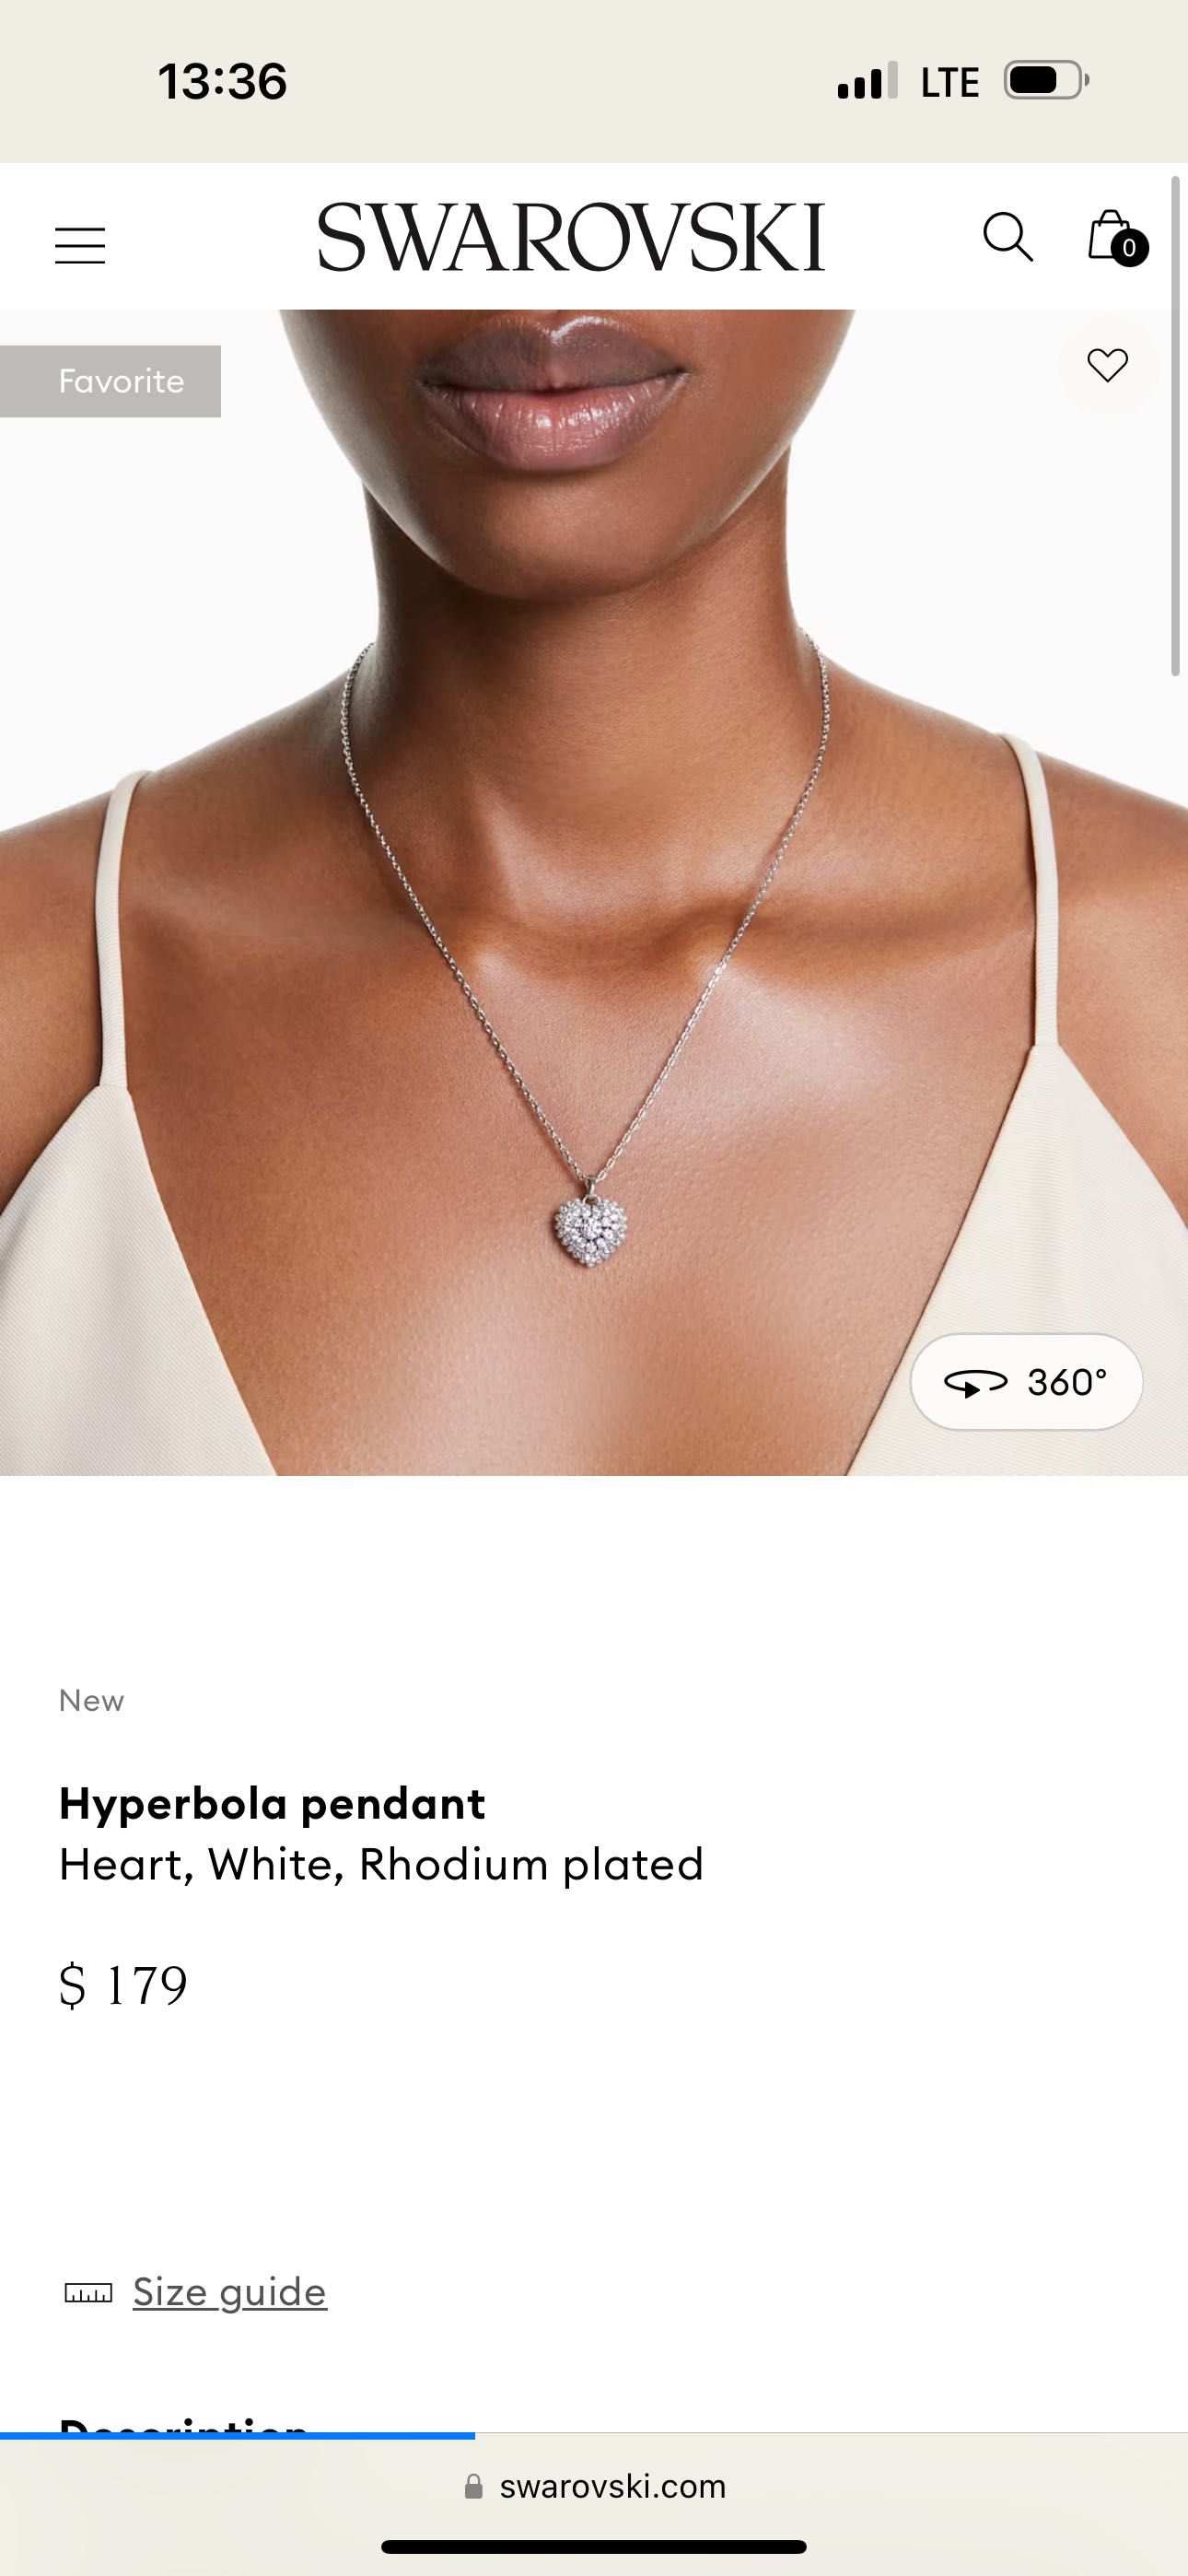 Підвіска Swarovski Hyperbola pendant
Heart, White, Rhodium plated